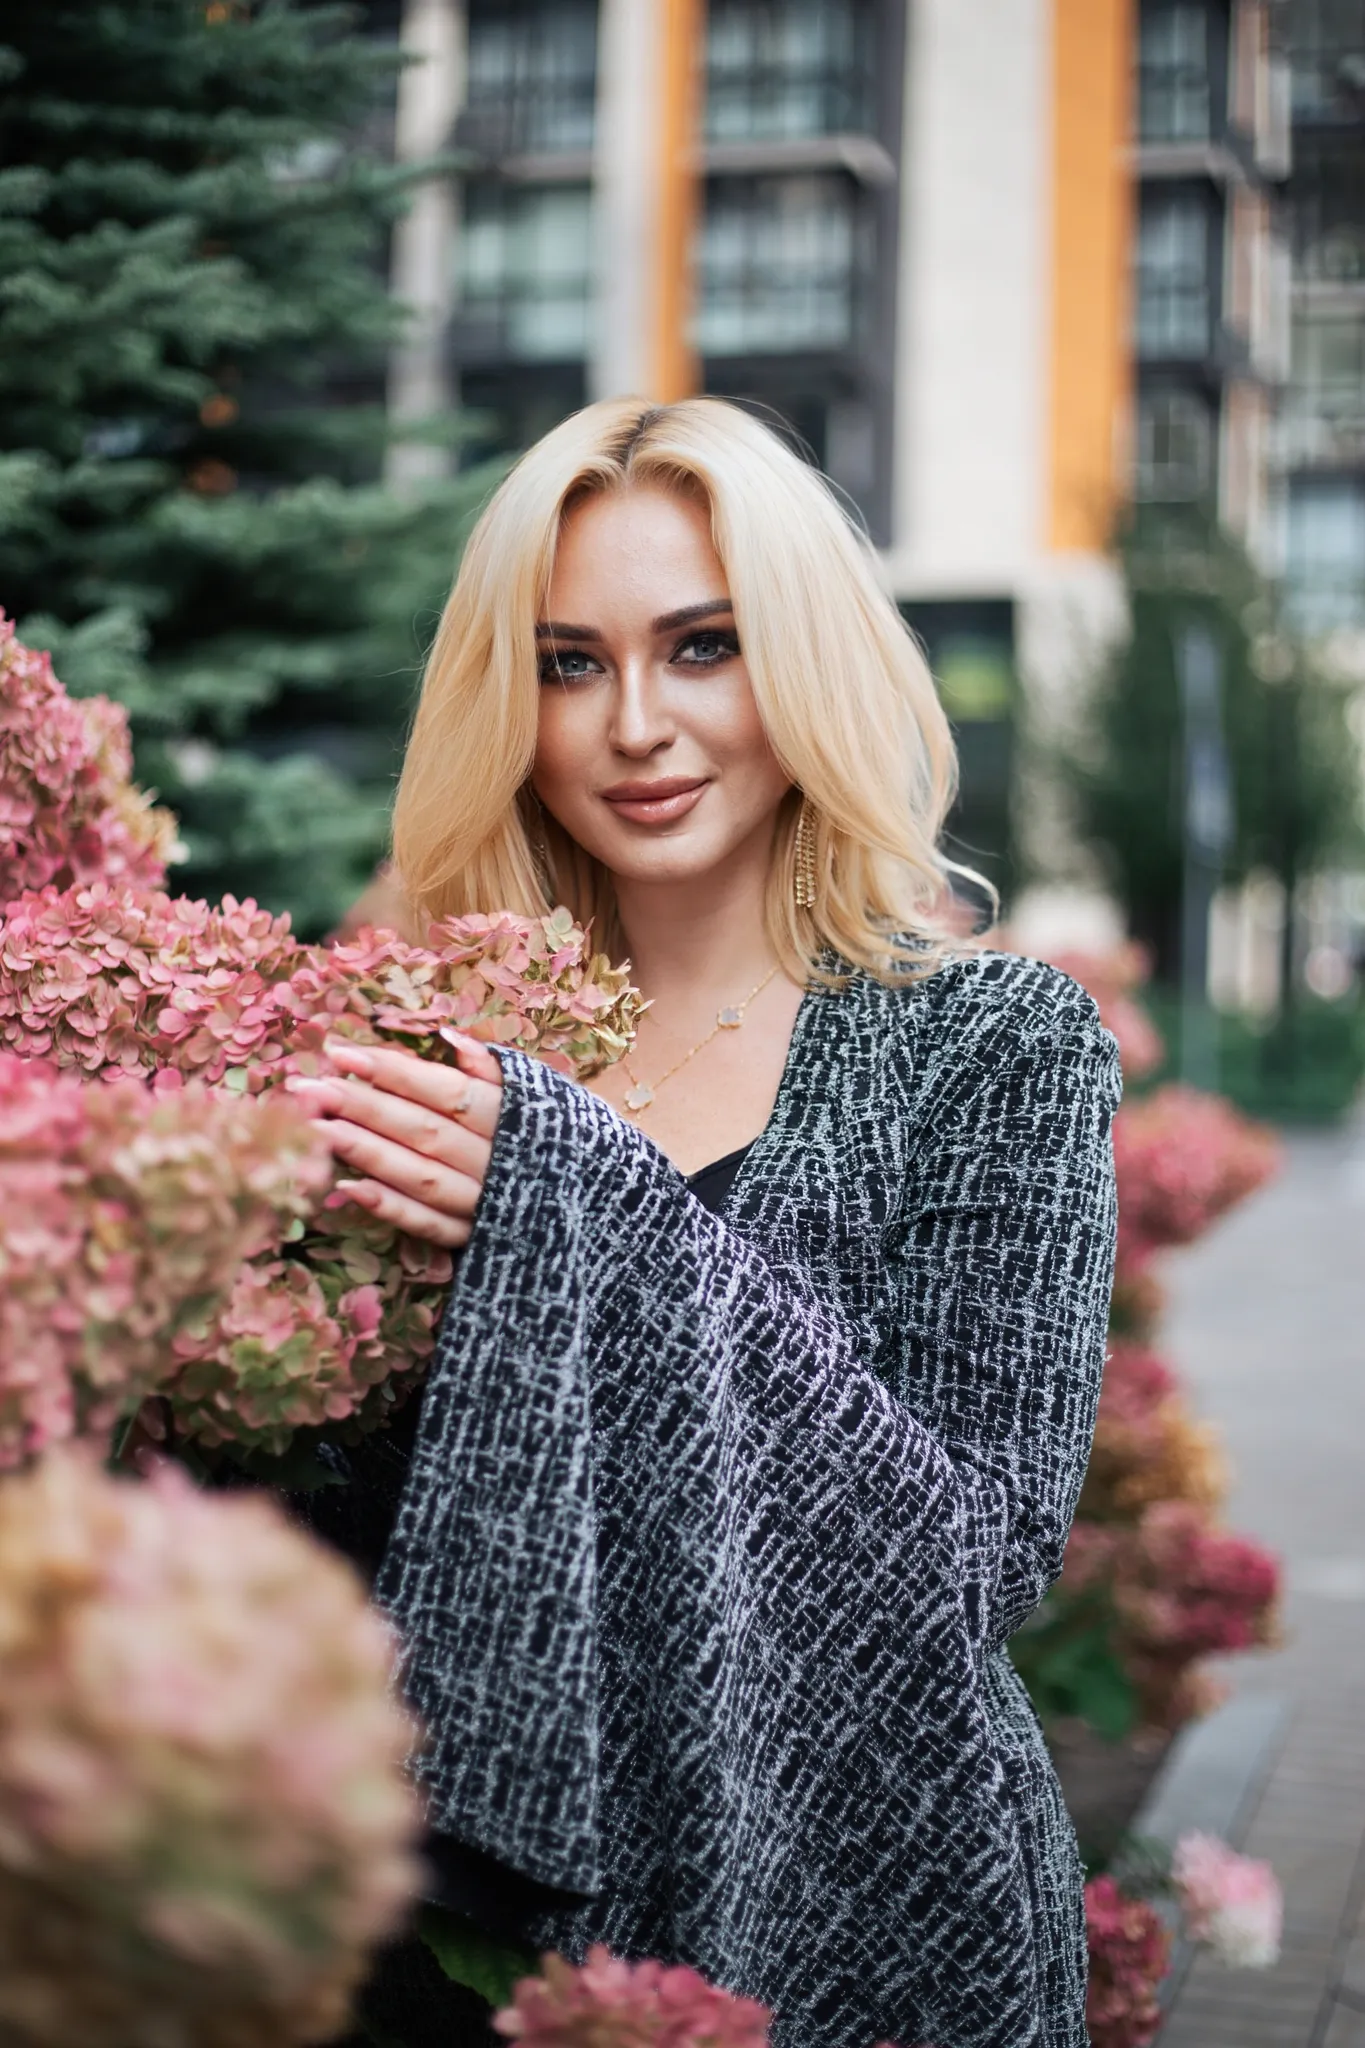 Anya mujeres rusas solteras inicio